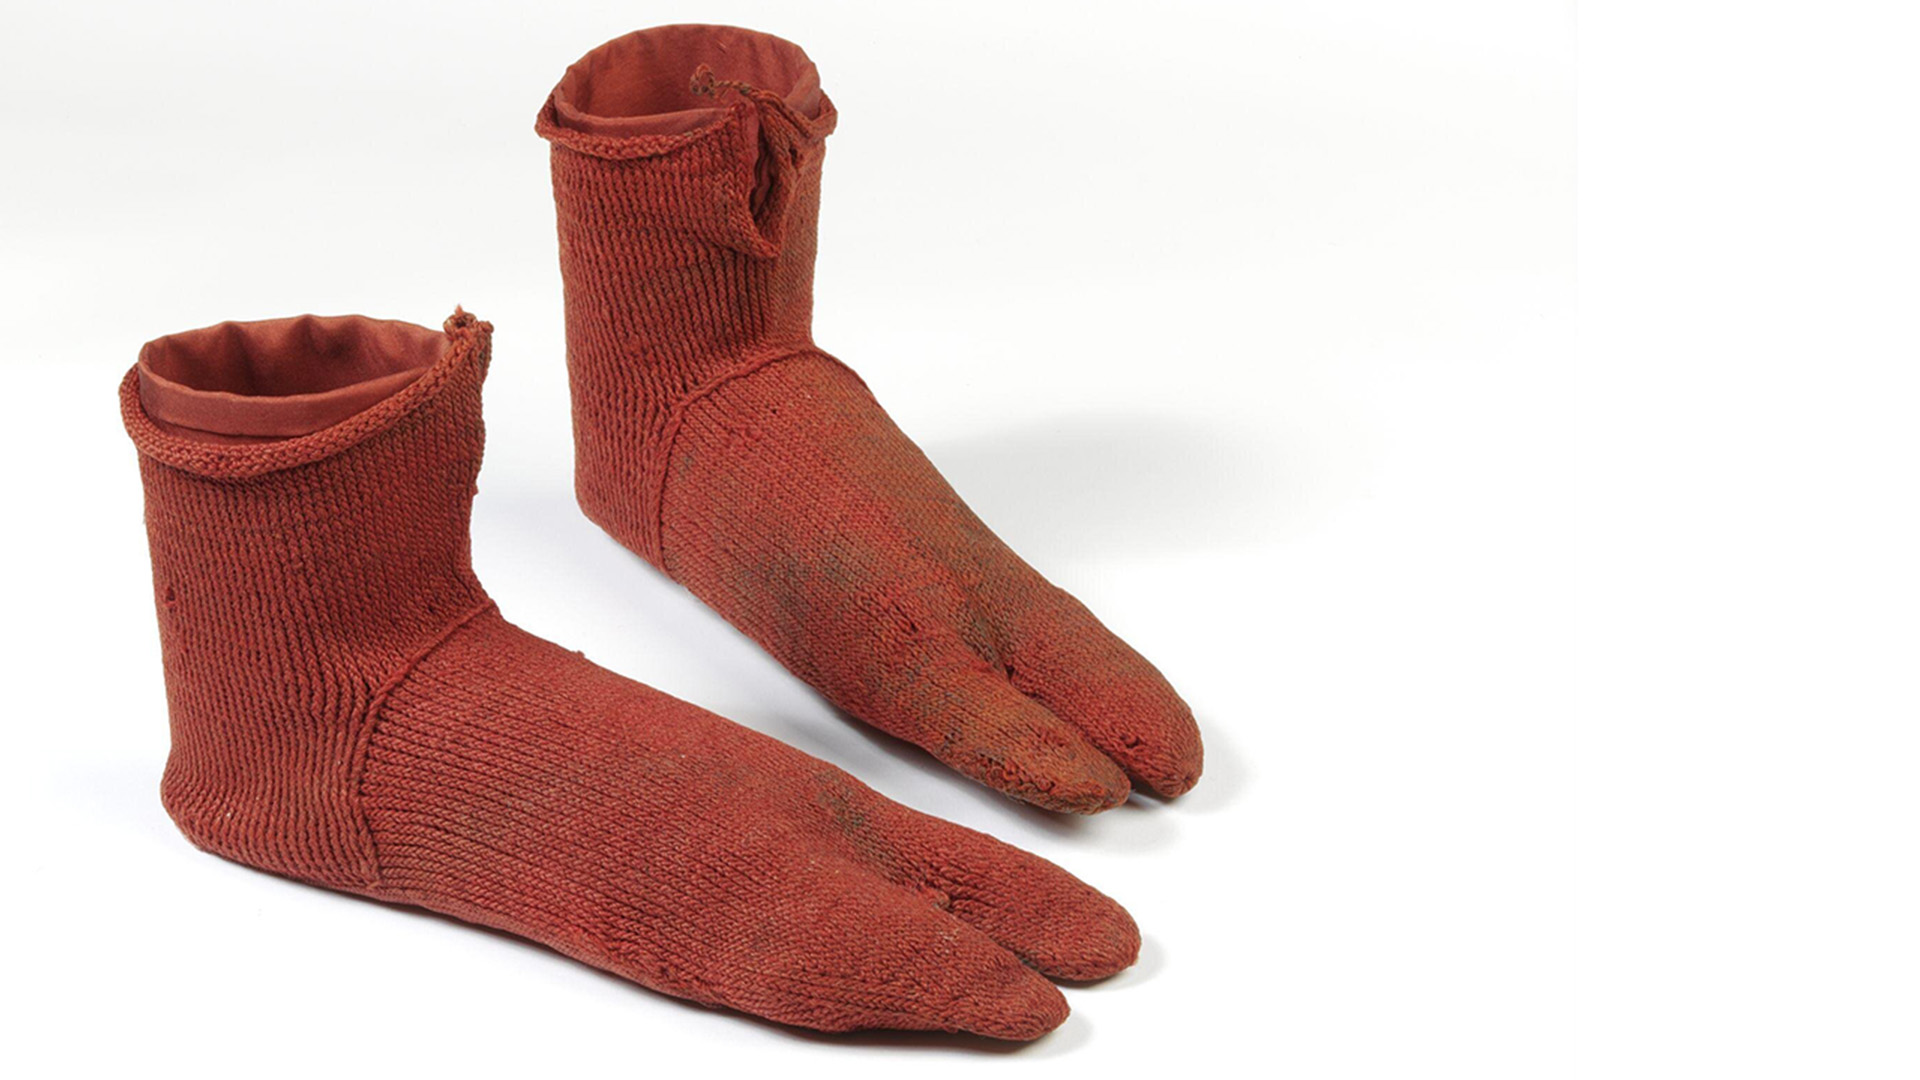 Dirty red woollen socks